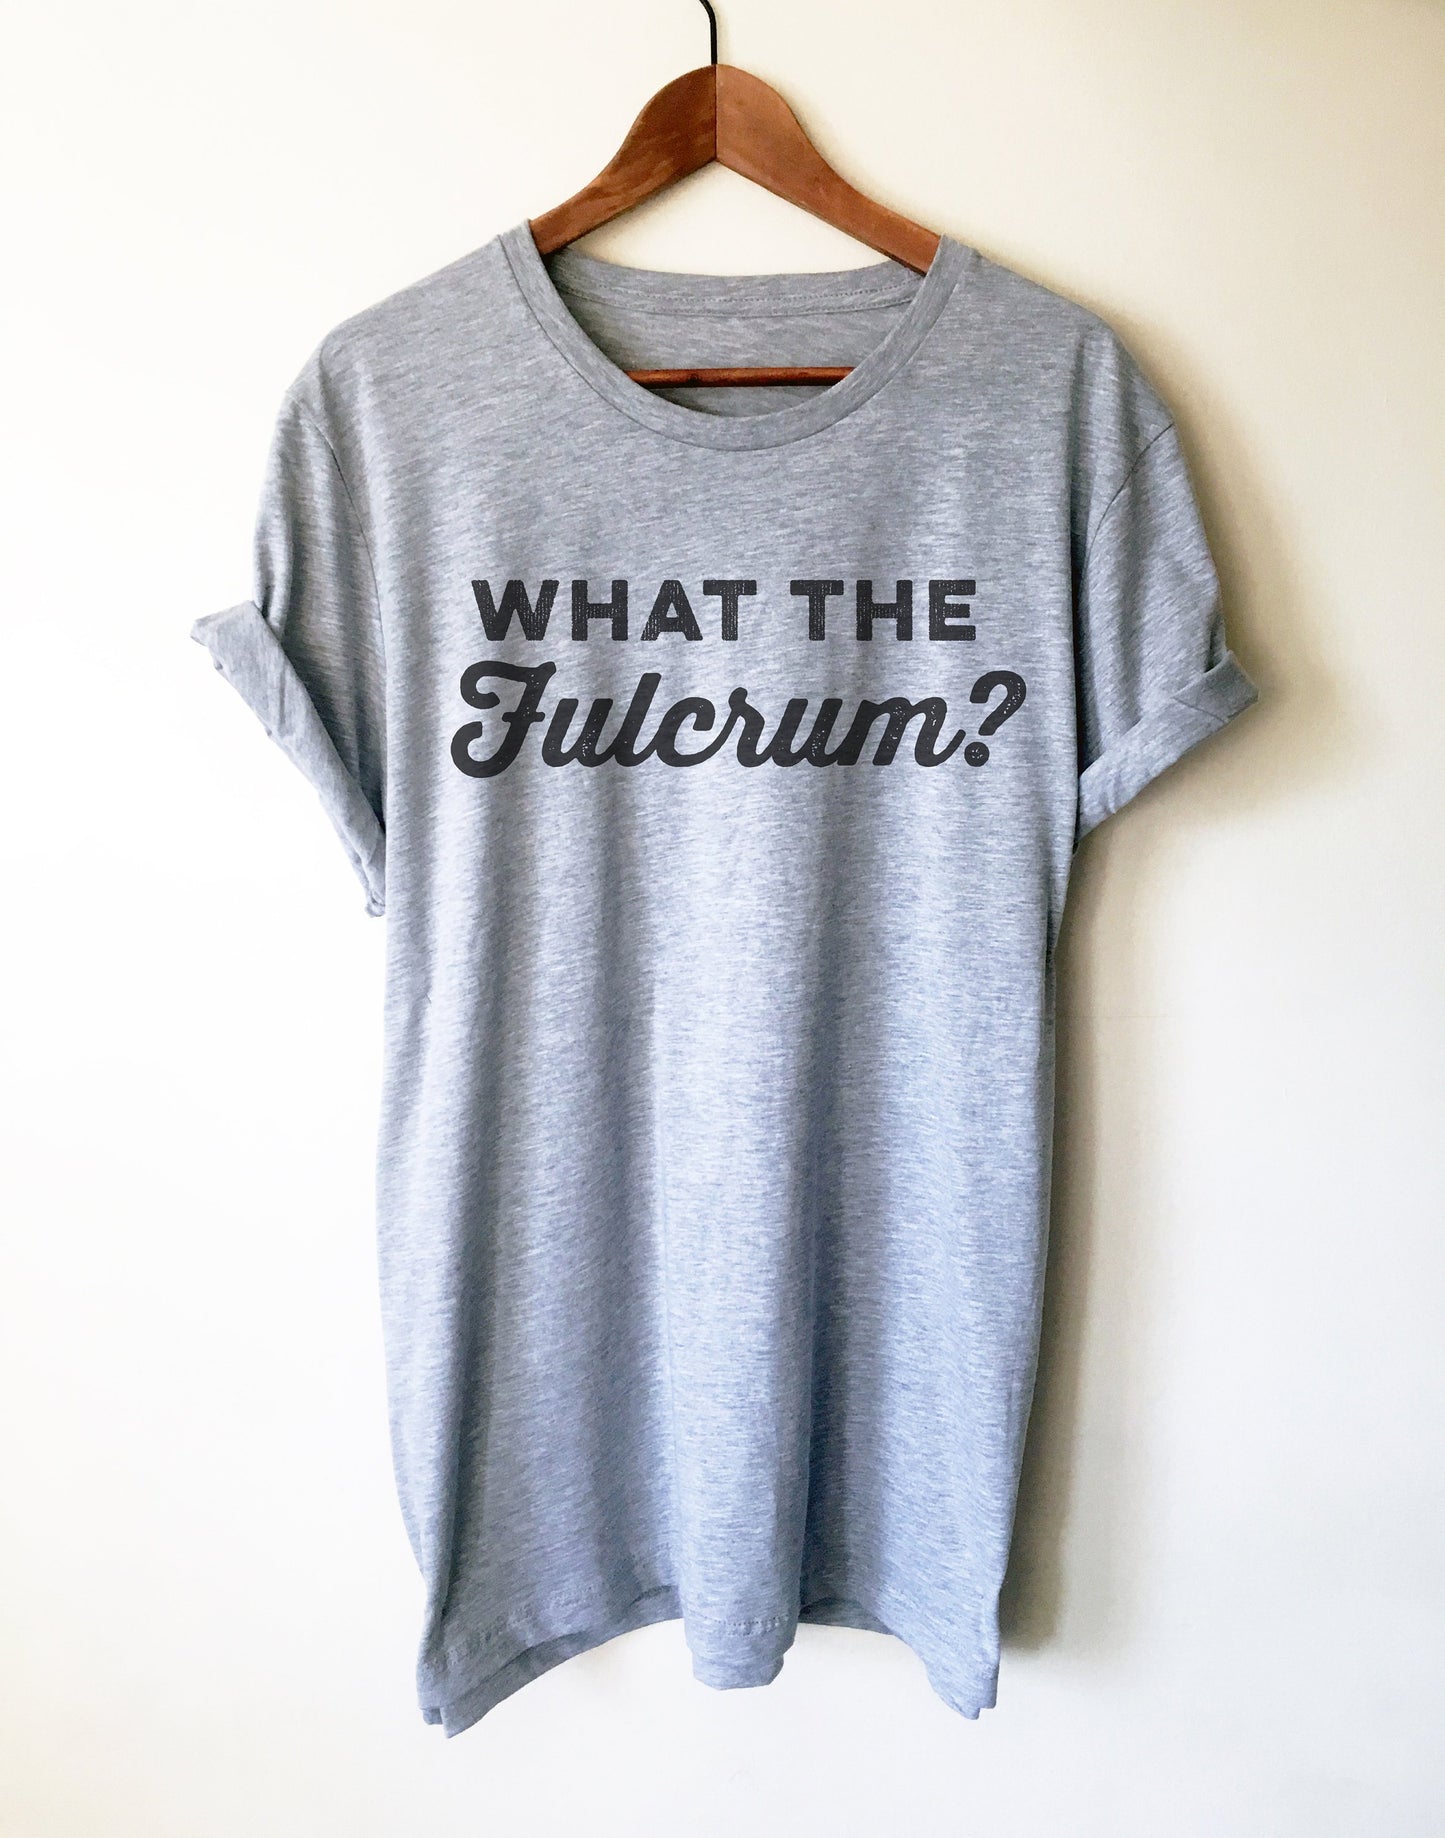 What The Fulcrum? Unisex Shirt - Dentist Gift, Dentist Shirt, Dental Student Gift, Dental Assistant, Dental Hygienist, Dental Shirt